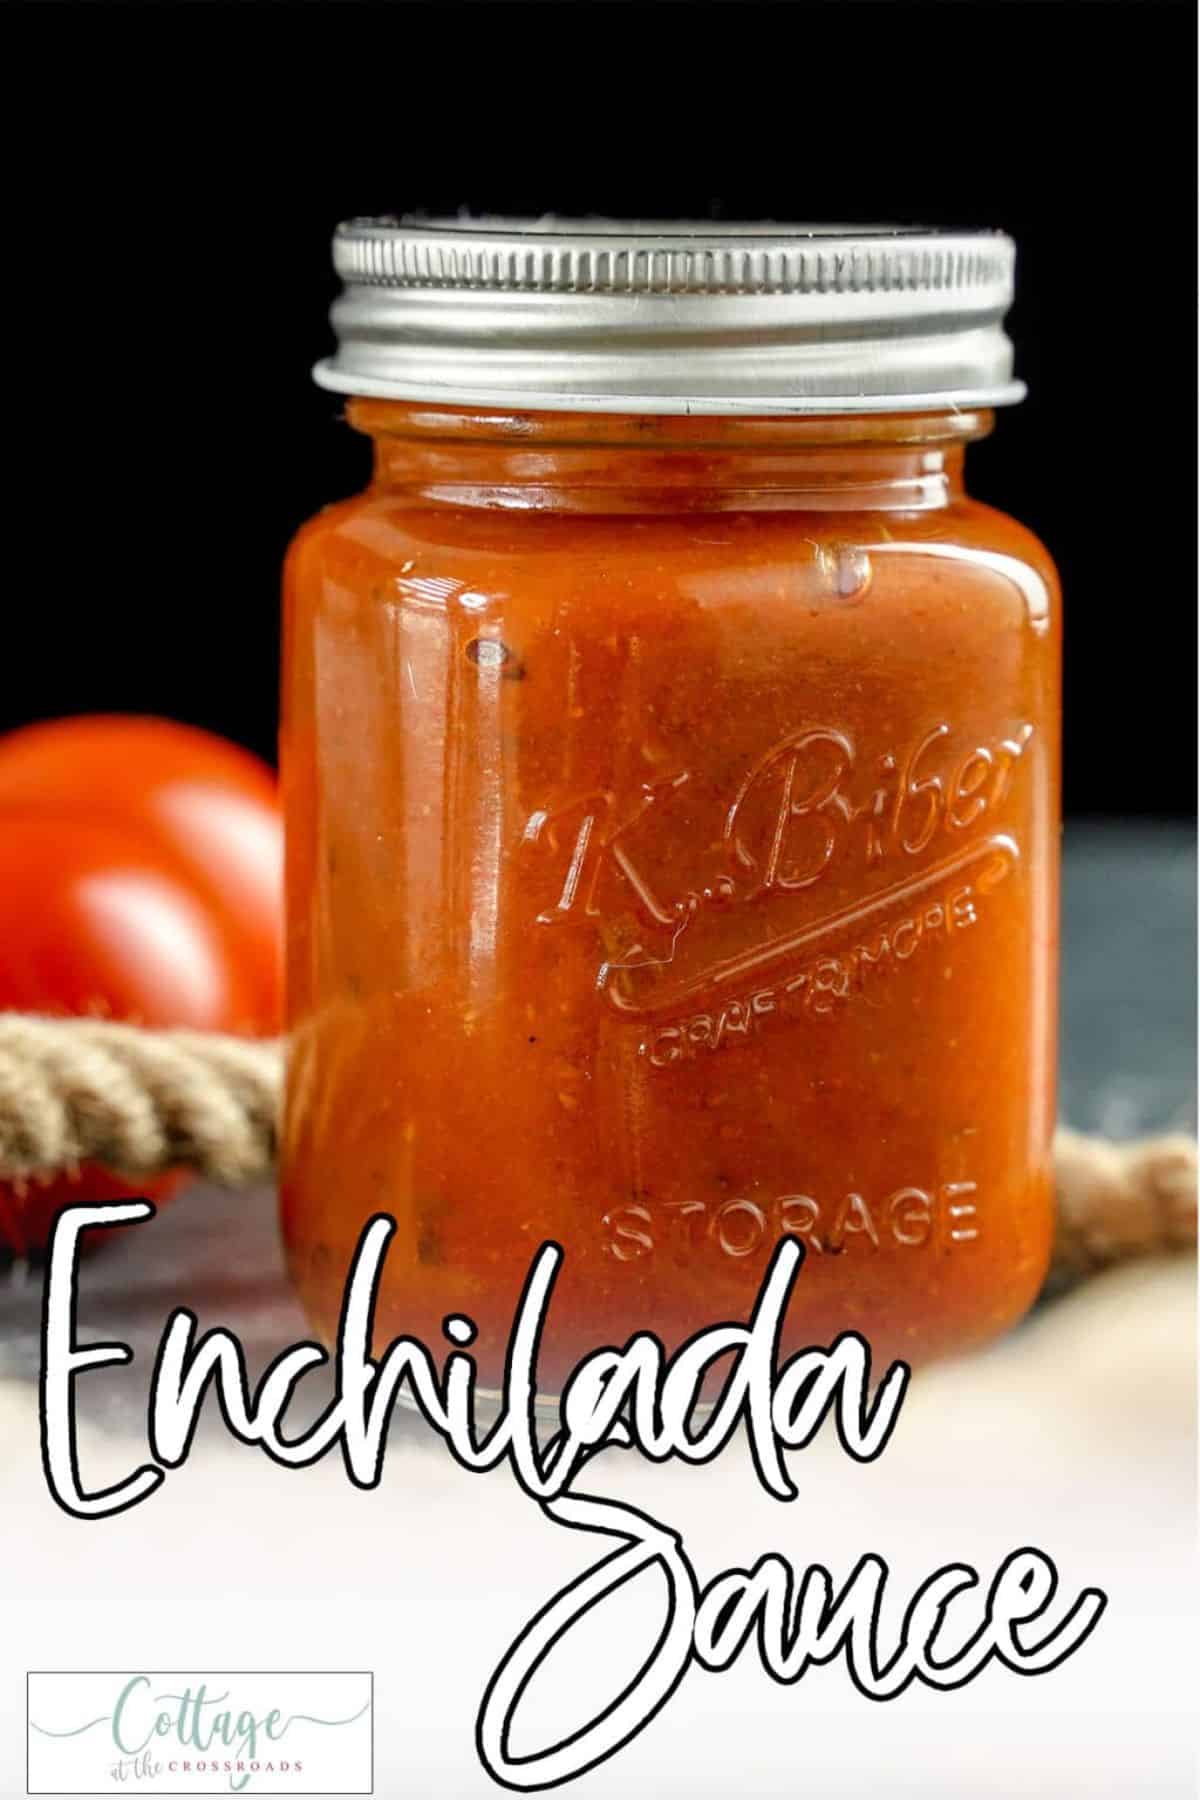 Enchilada sauce in a glass jar.